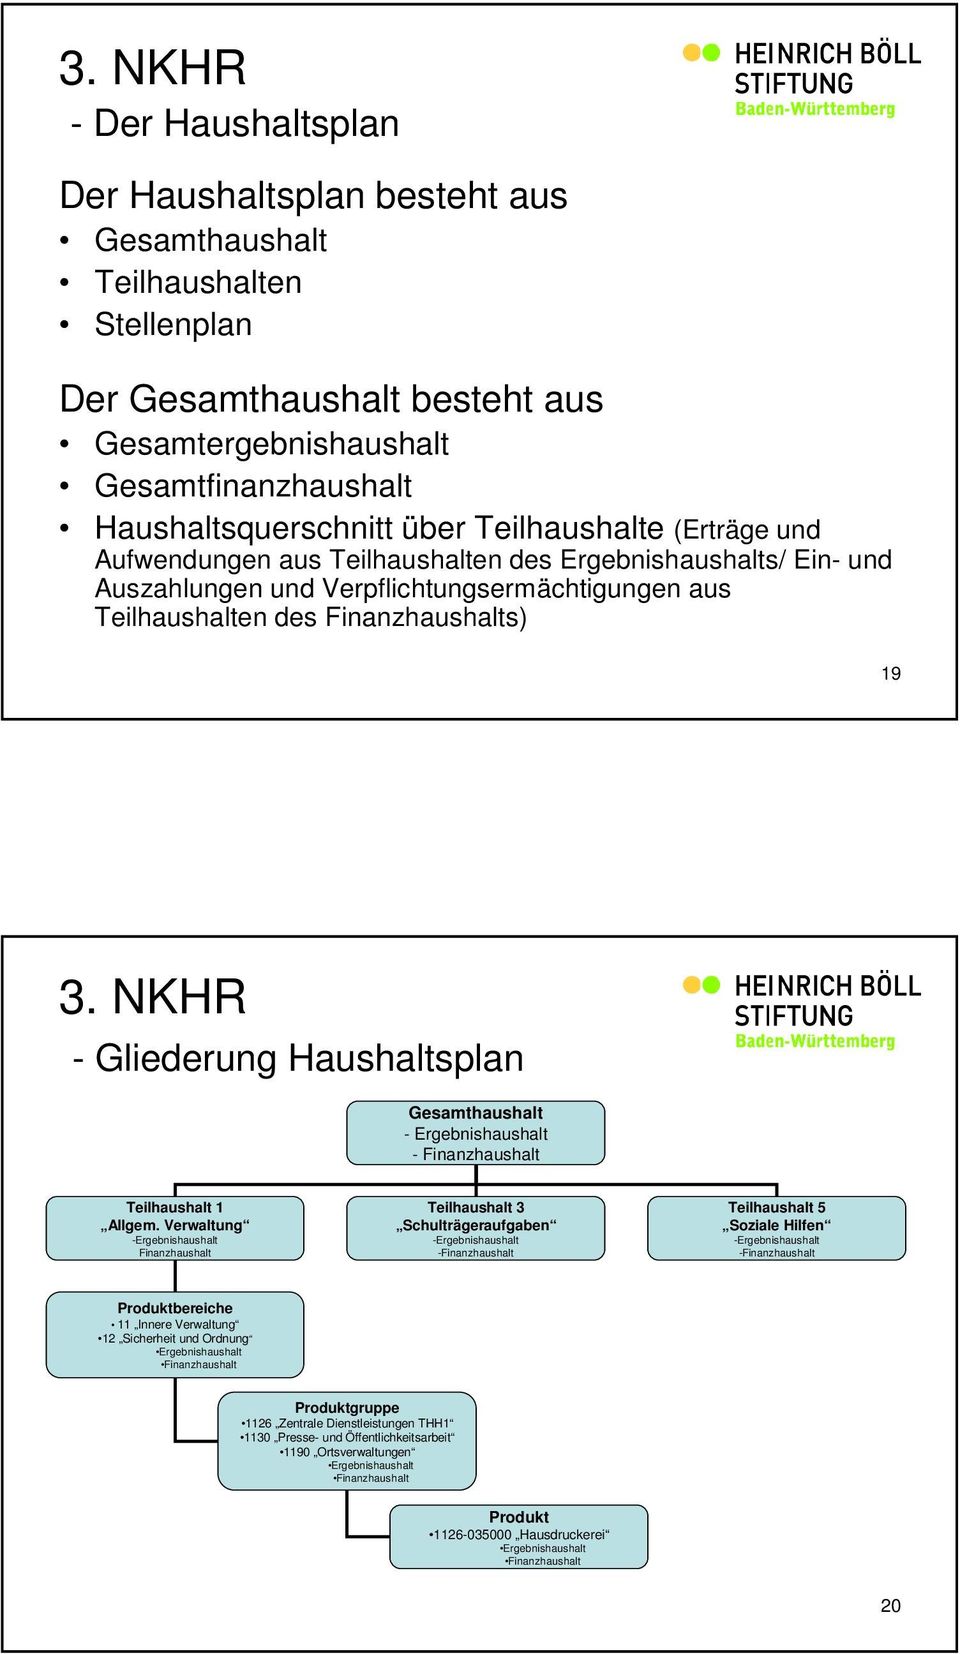 NKHR - Gliederung Haushaltsplan Gesamthaushalt - Ergebnishaushalt - Finanzhaushalt Teilhaushalt 1 Allgem.